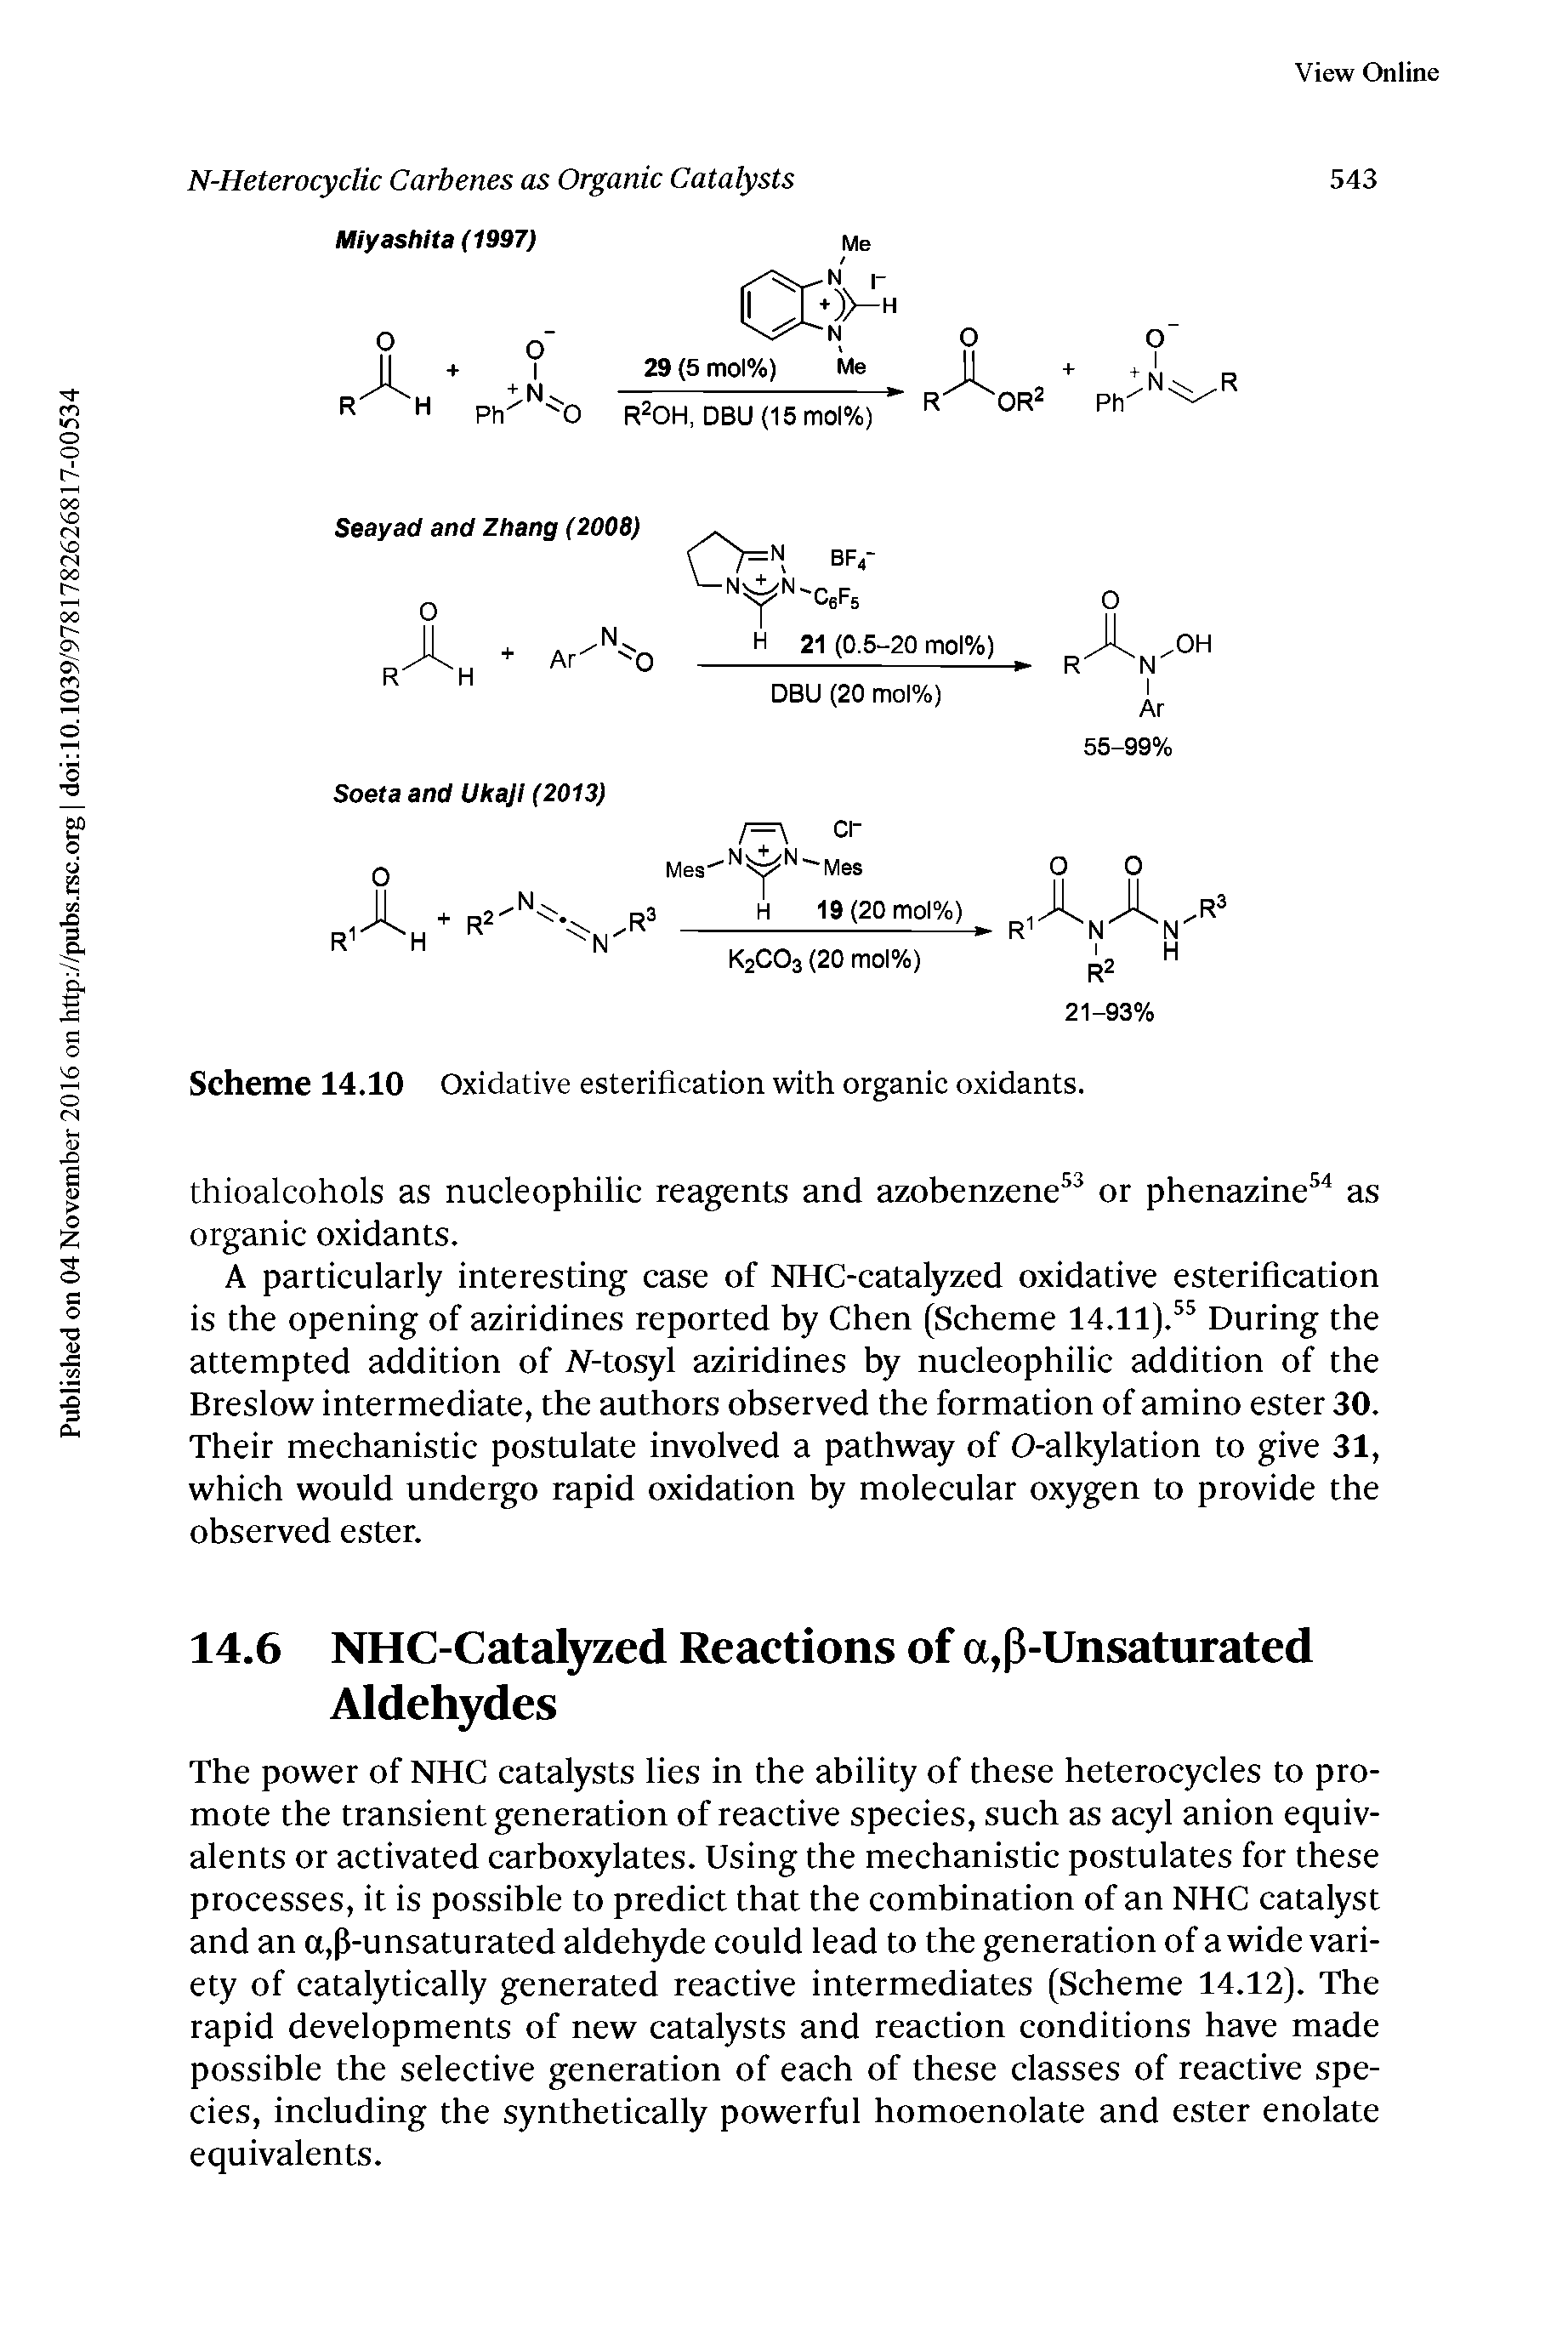 Scheme 14.10 Oxidative esterification with organic oxidants.